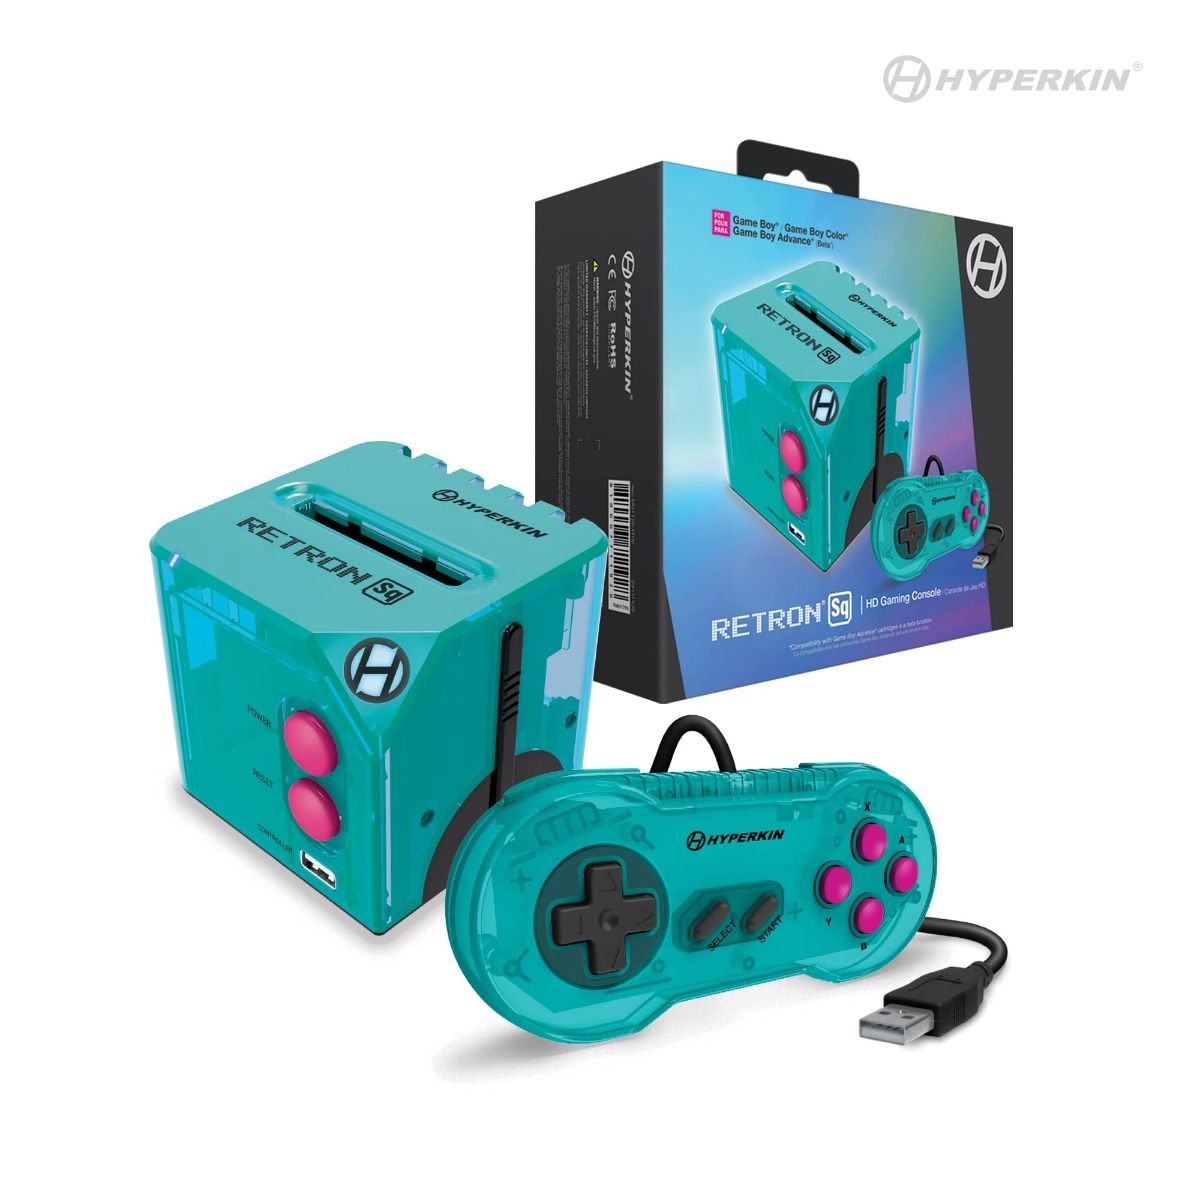 J2Games.com | RetroN Sq: HD Gaming Console For Game Boy/Game Boy Color/Game Boy Advance (Hyper Beach) (Hyperkin) (Brand New).